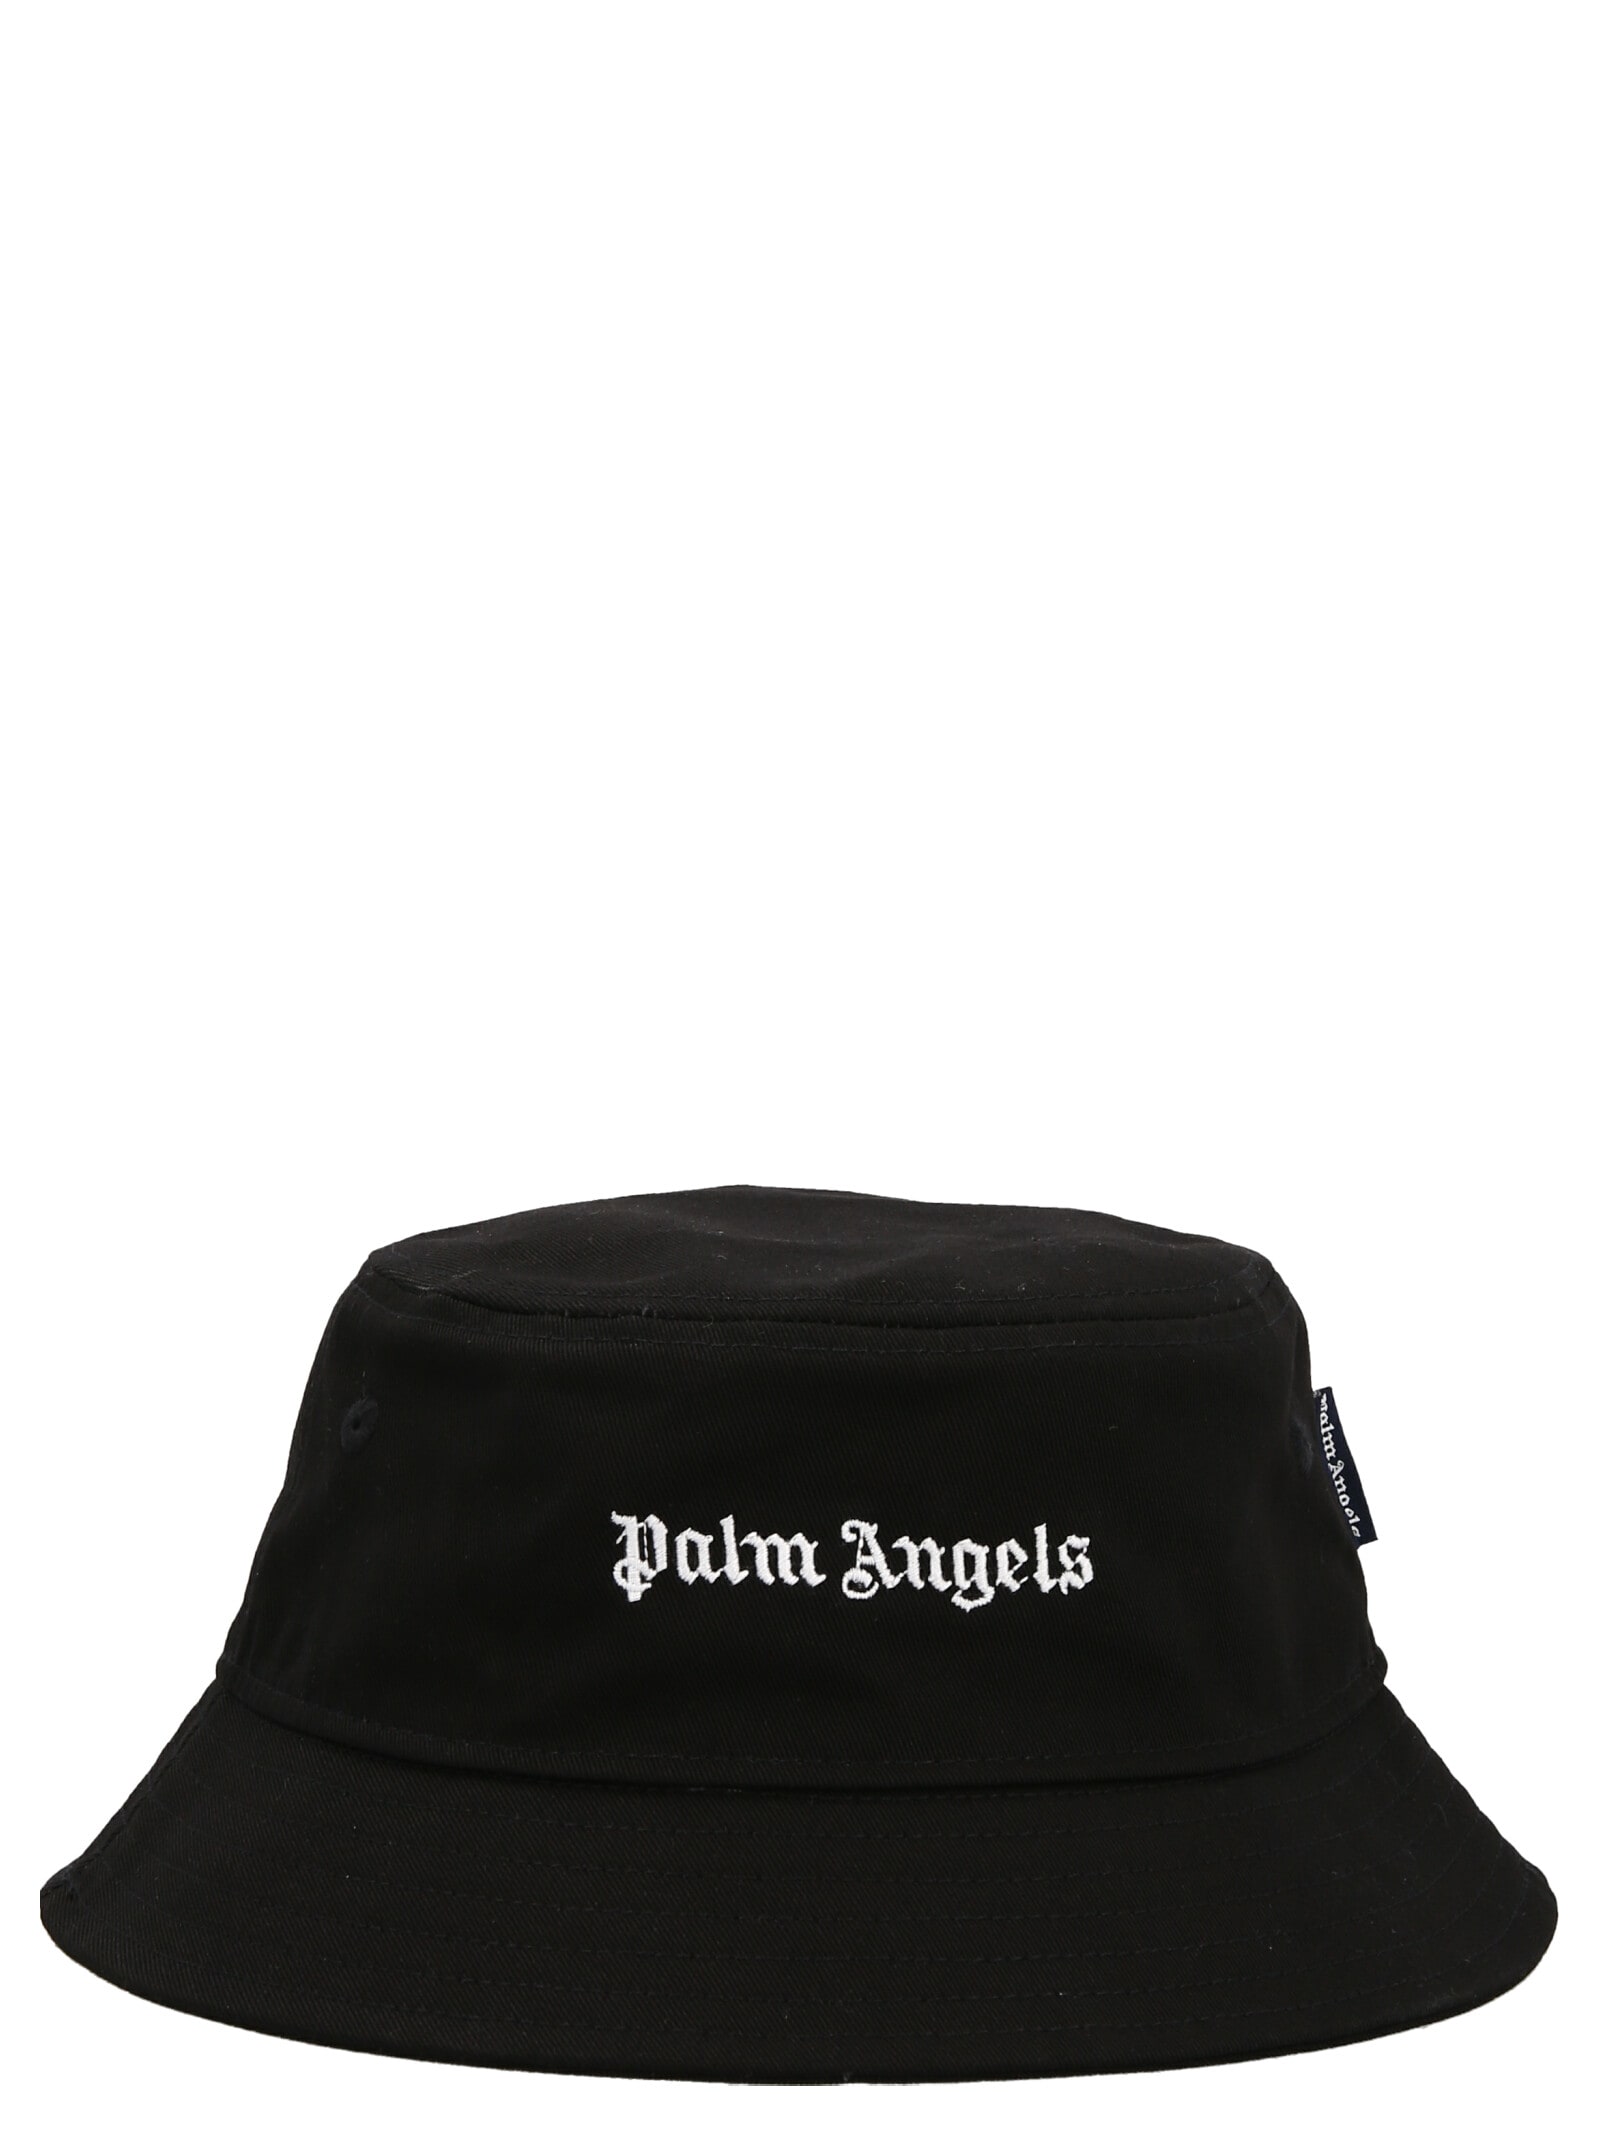 Palm Angels Logo Bucket Hat